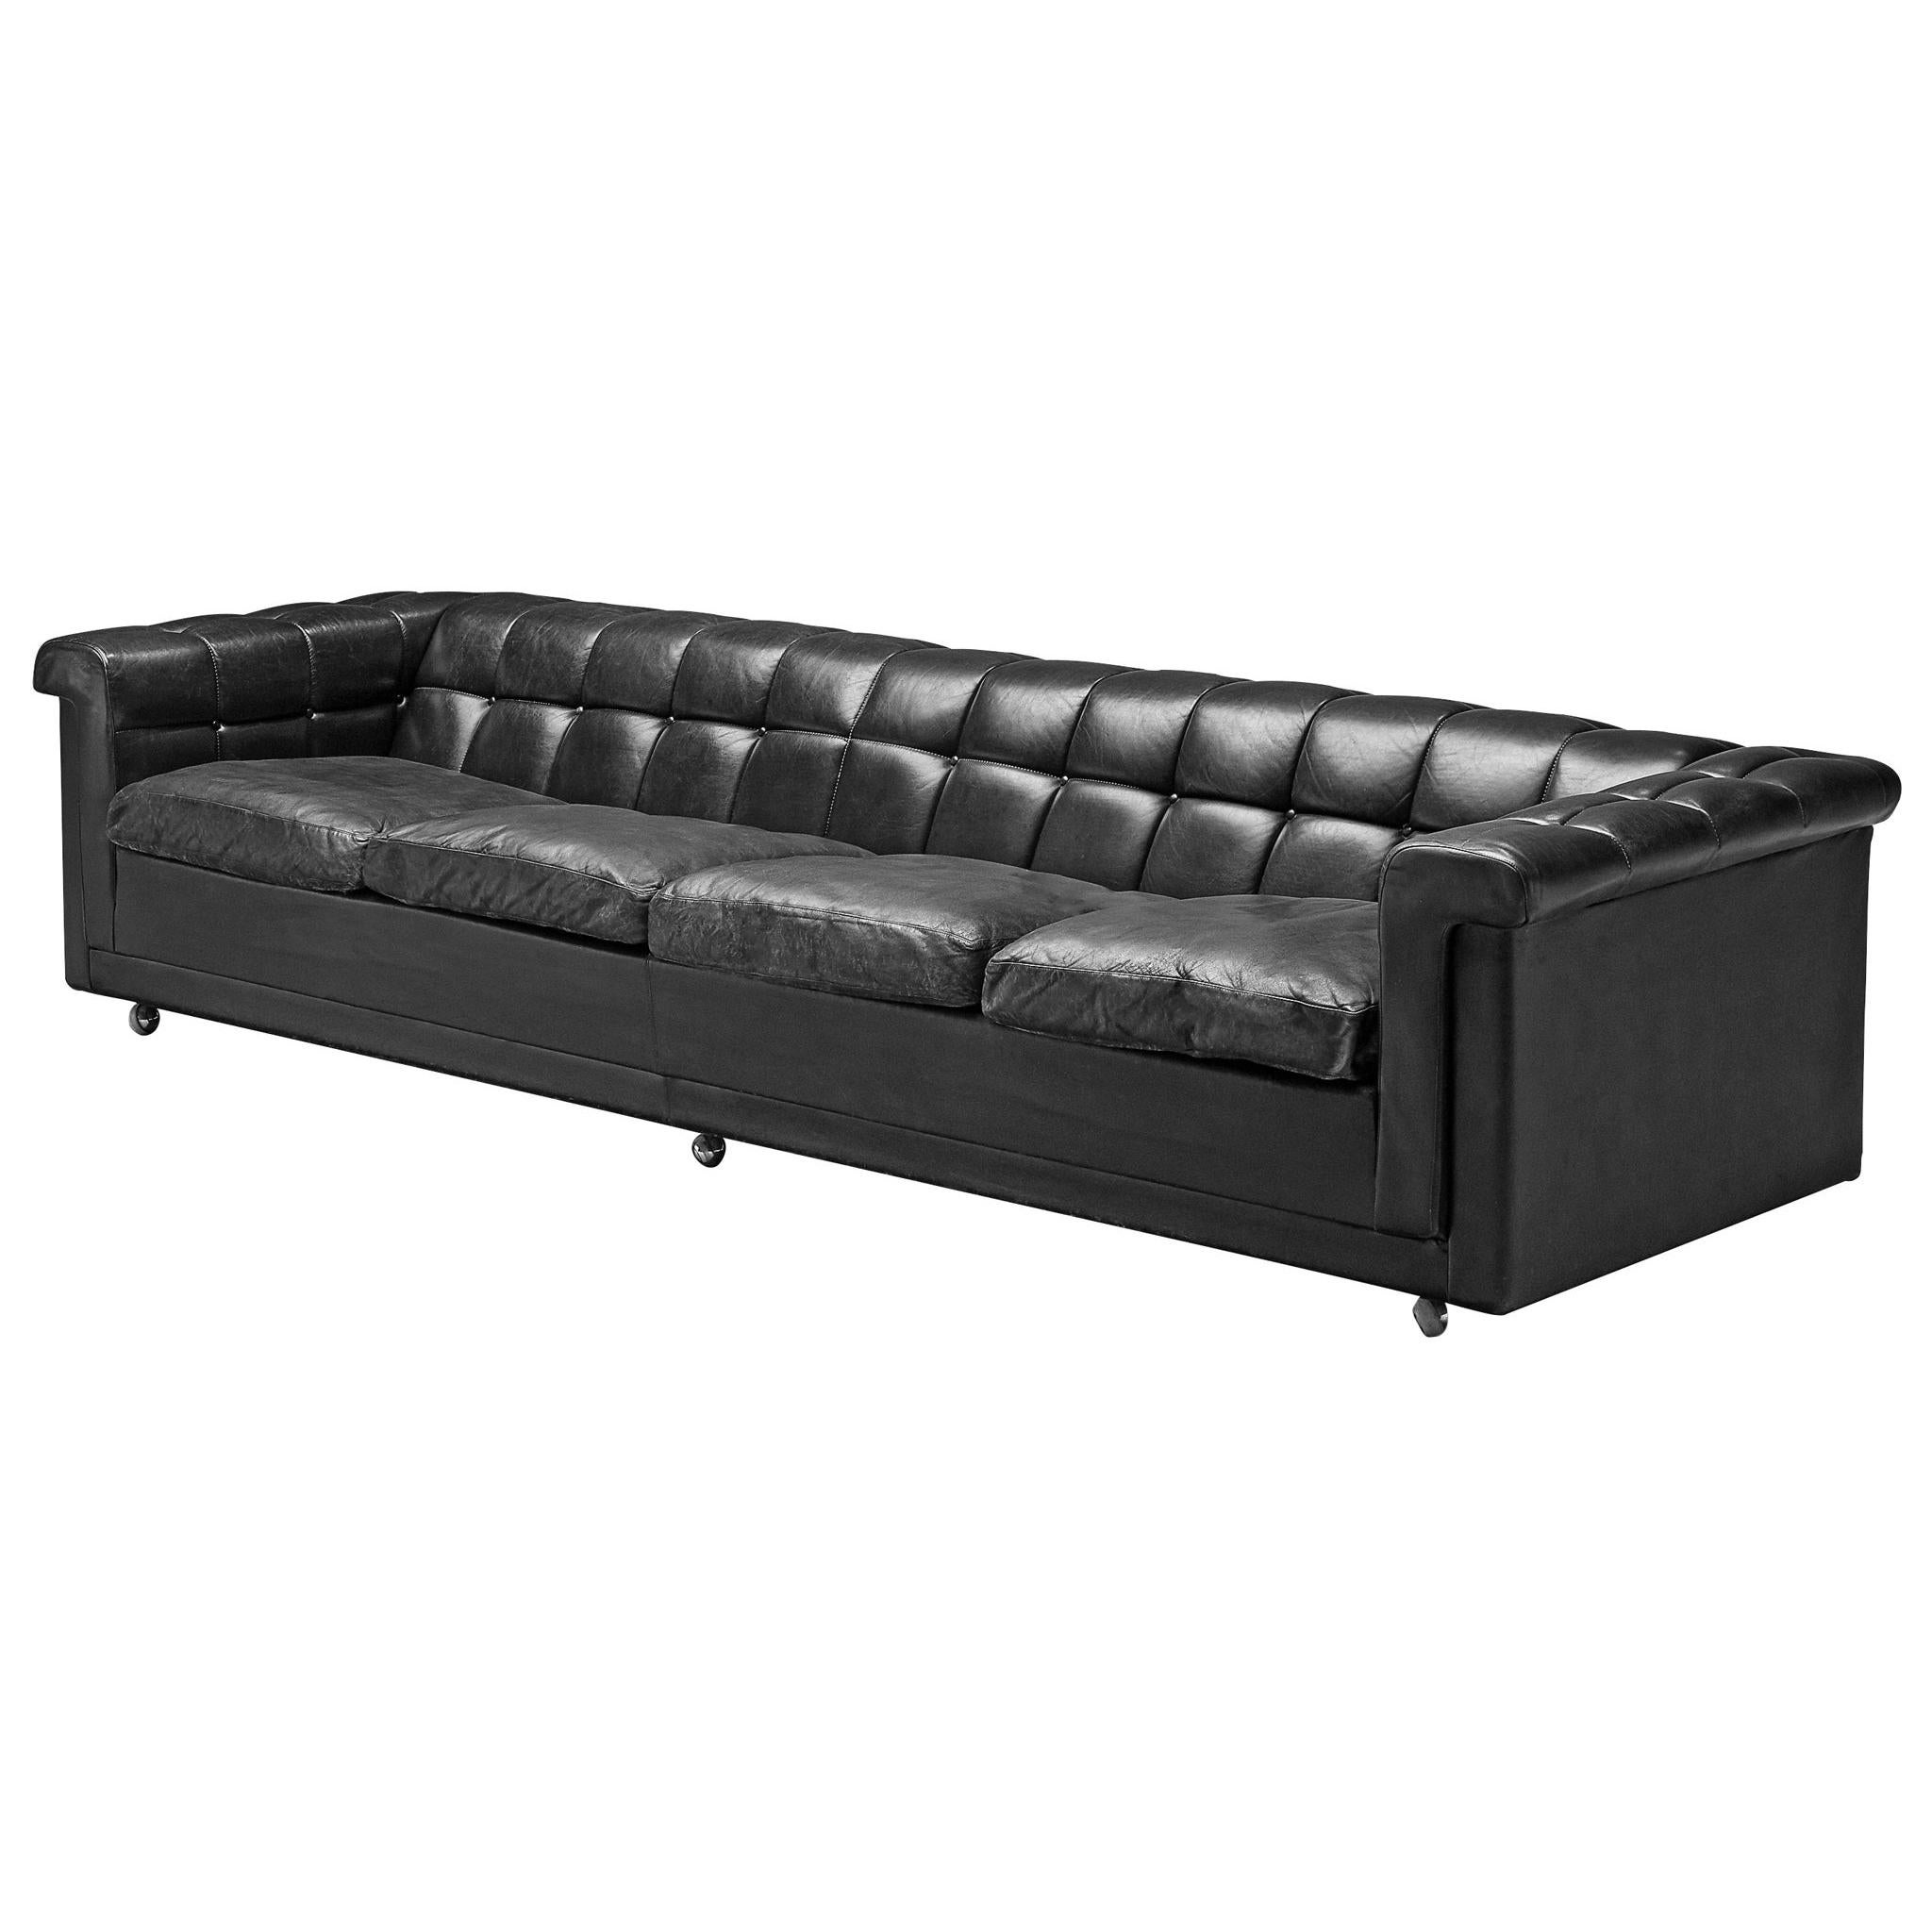 Robert Haussmann Tufted Four-Seat Sofa in Black Leather